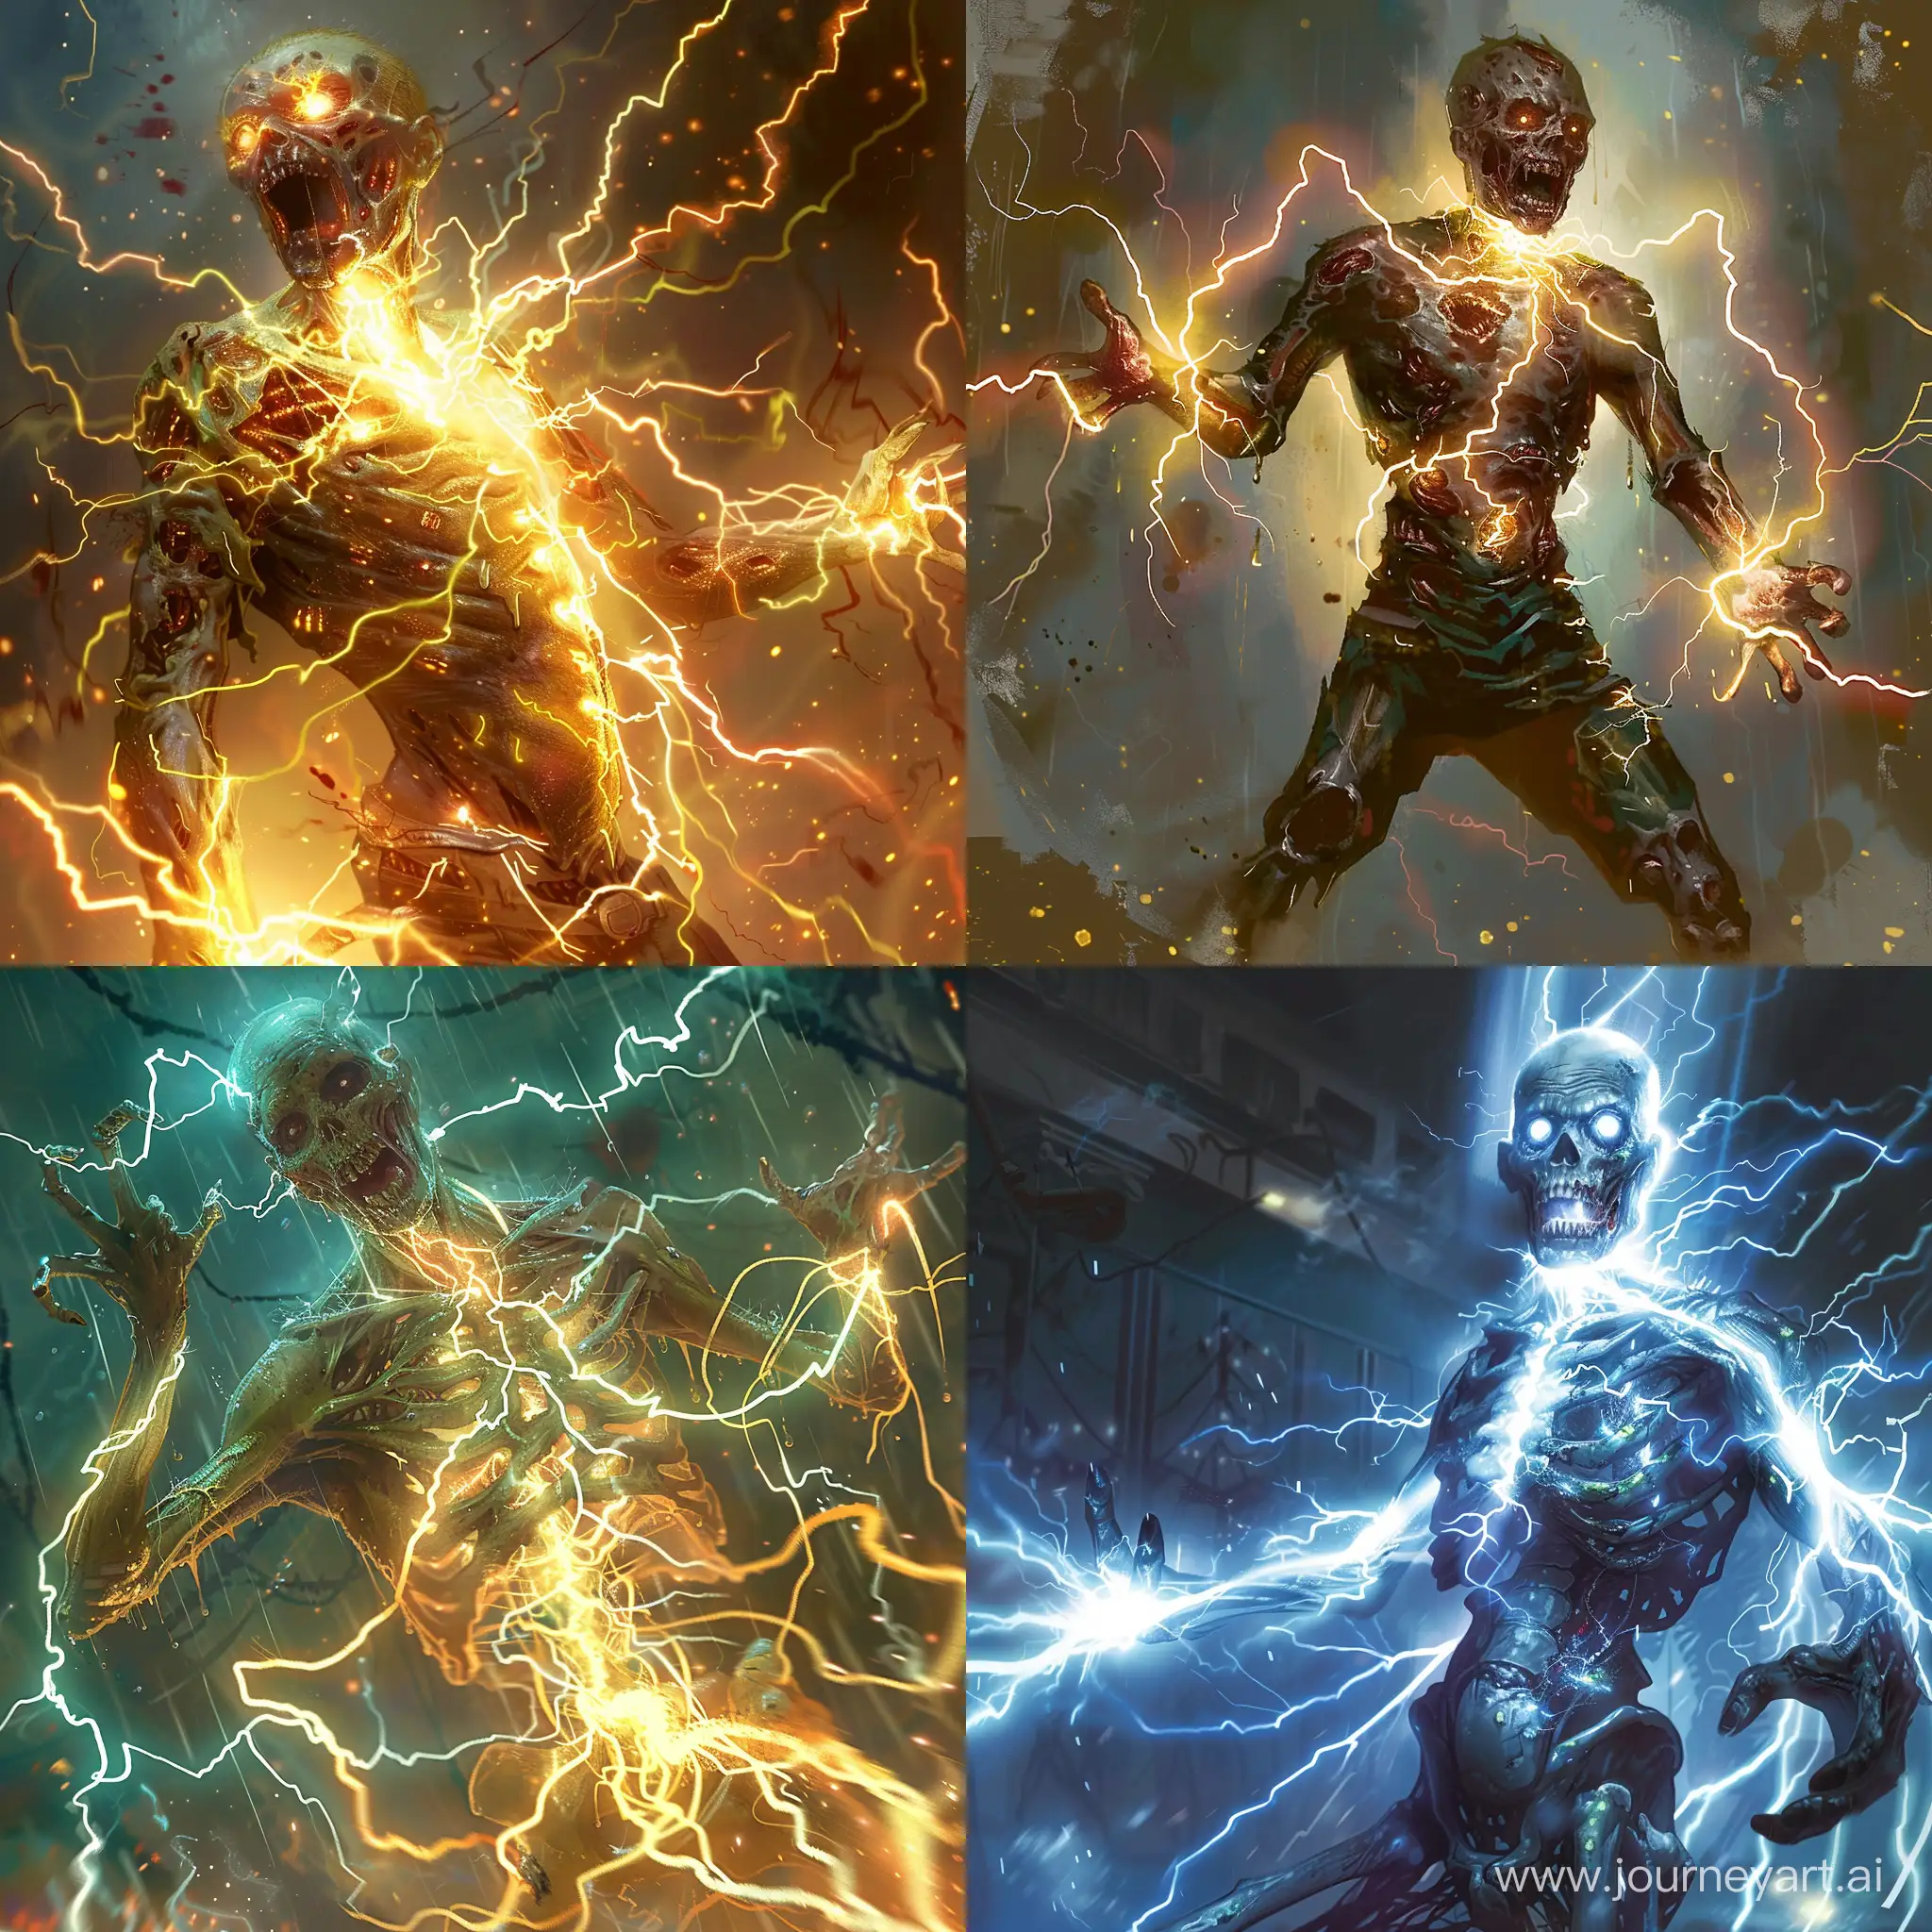 Energetic-Zombie-Controllers-Supernatural-Beings-Emitting-Electric-Glow